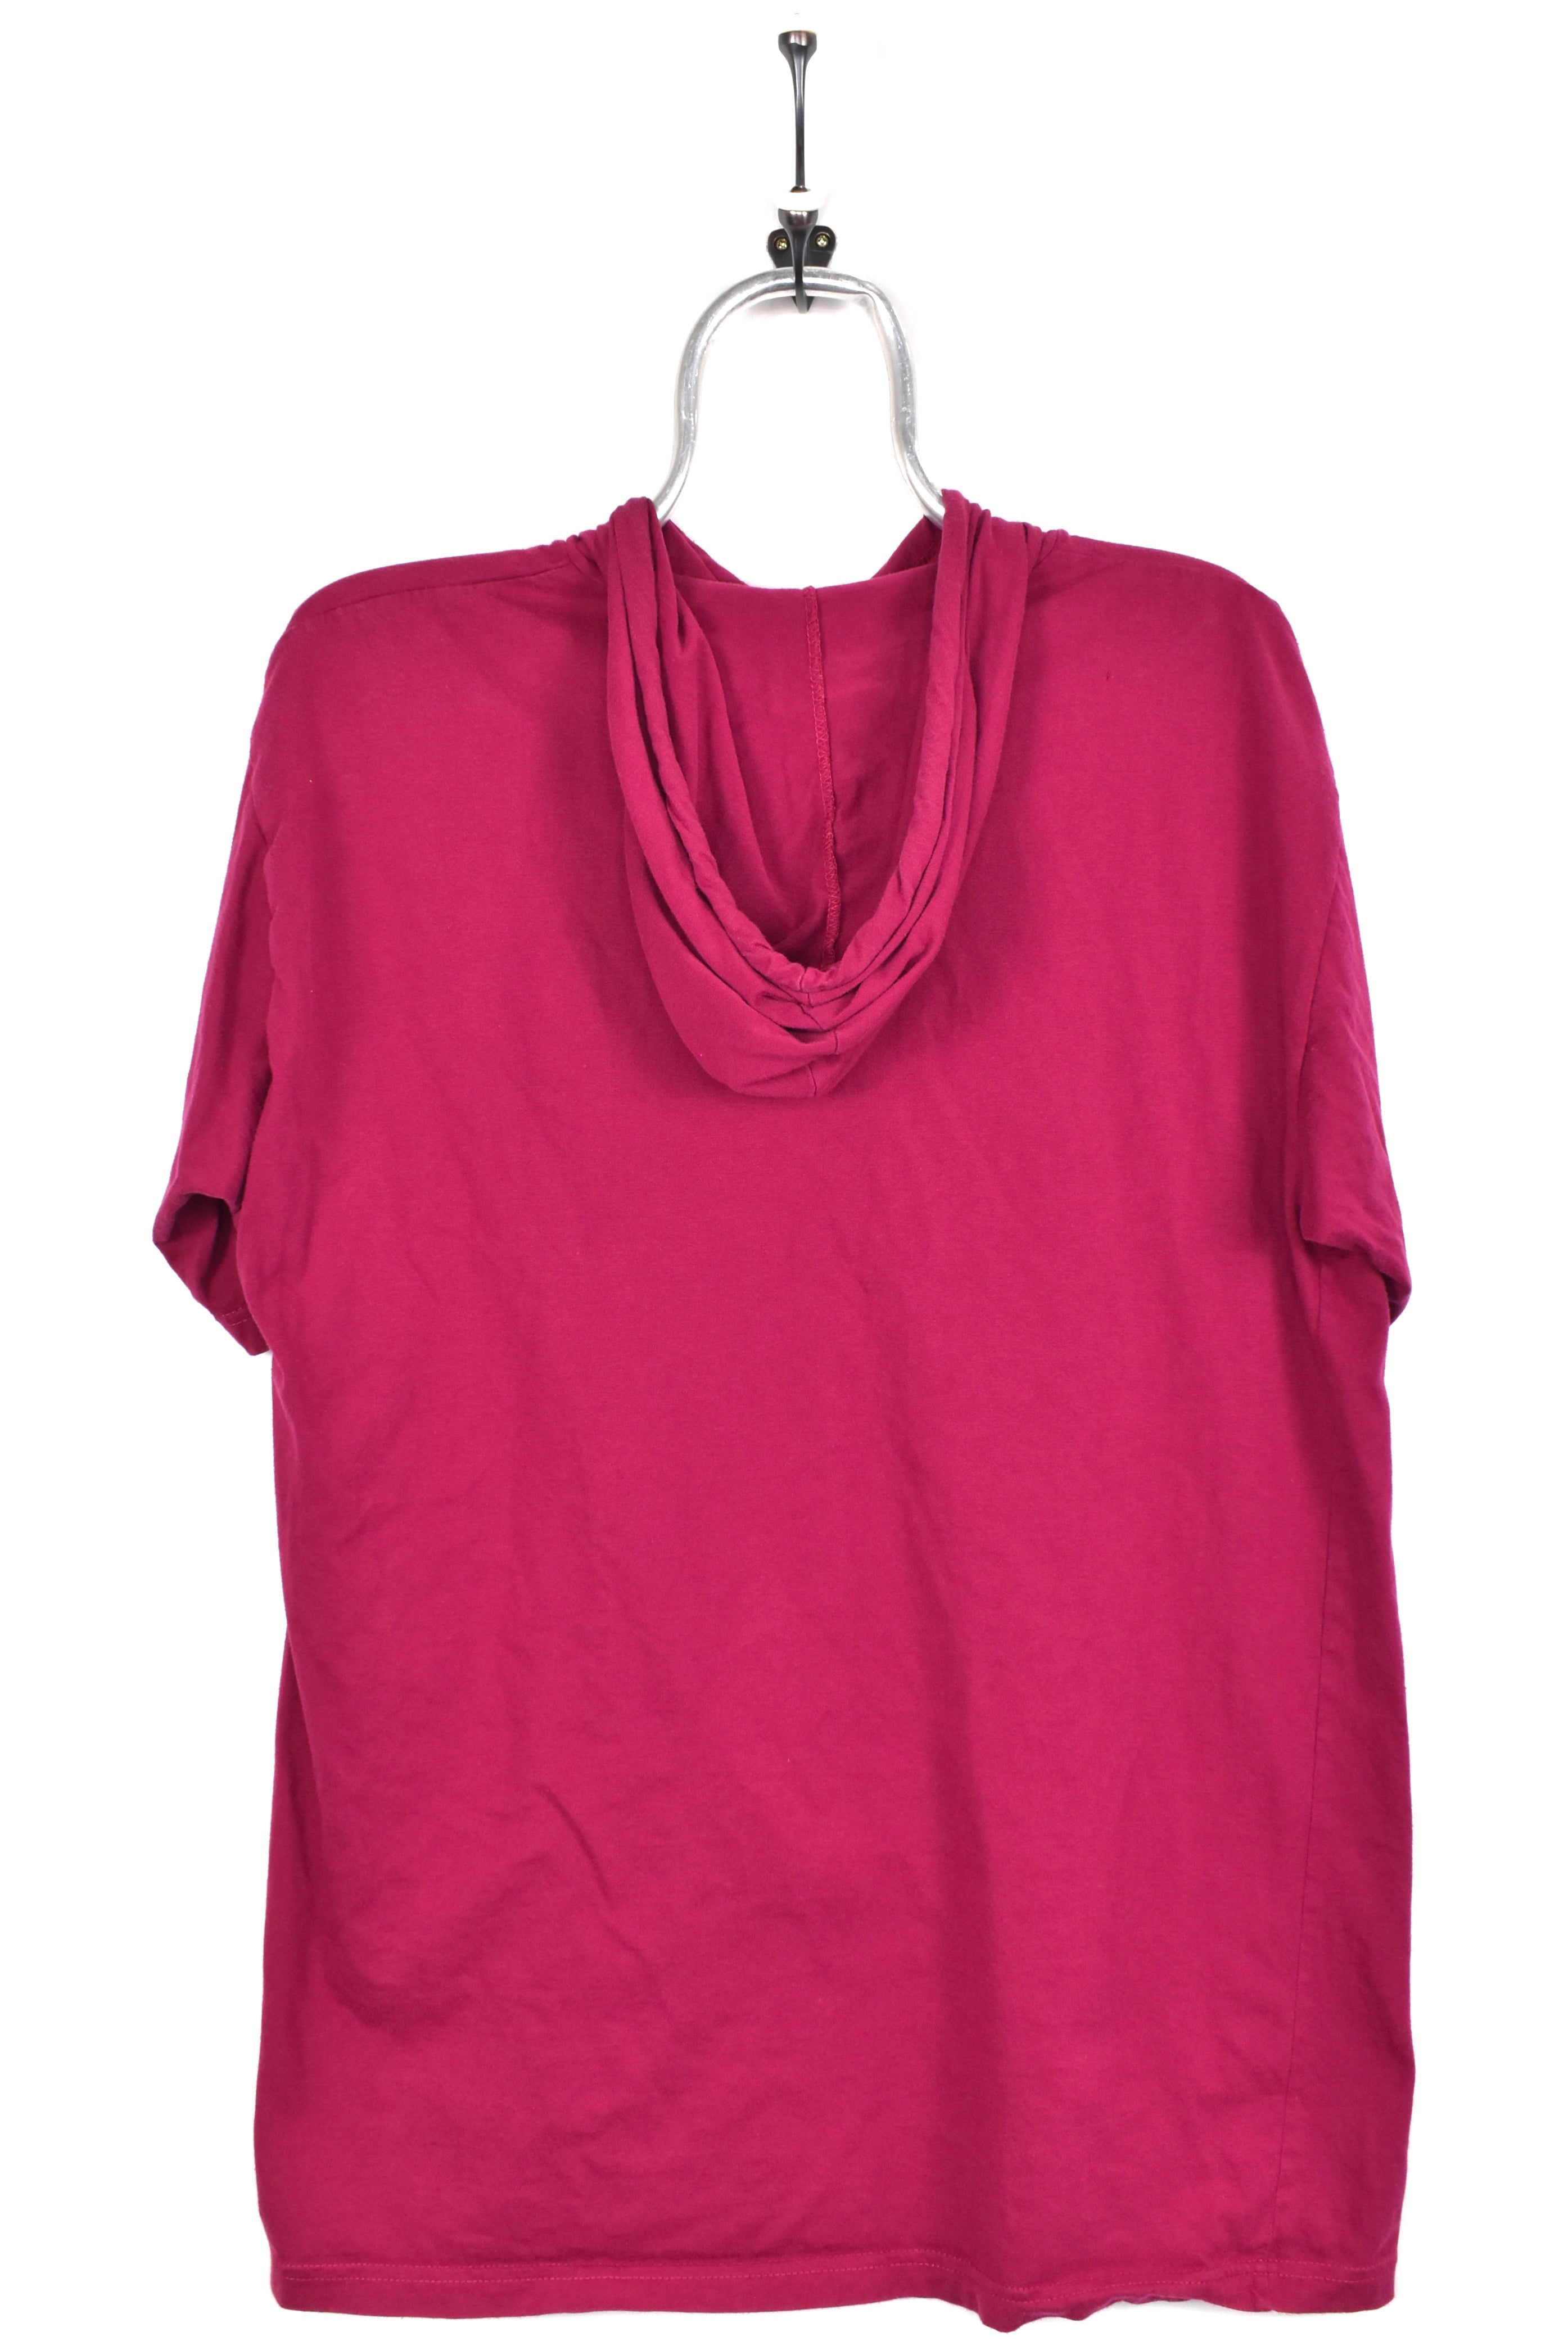 Vintage Nike shirt, 80's burgundy embroidered hooded tee - AU L NIKE